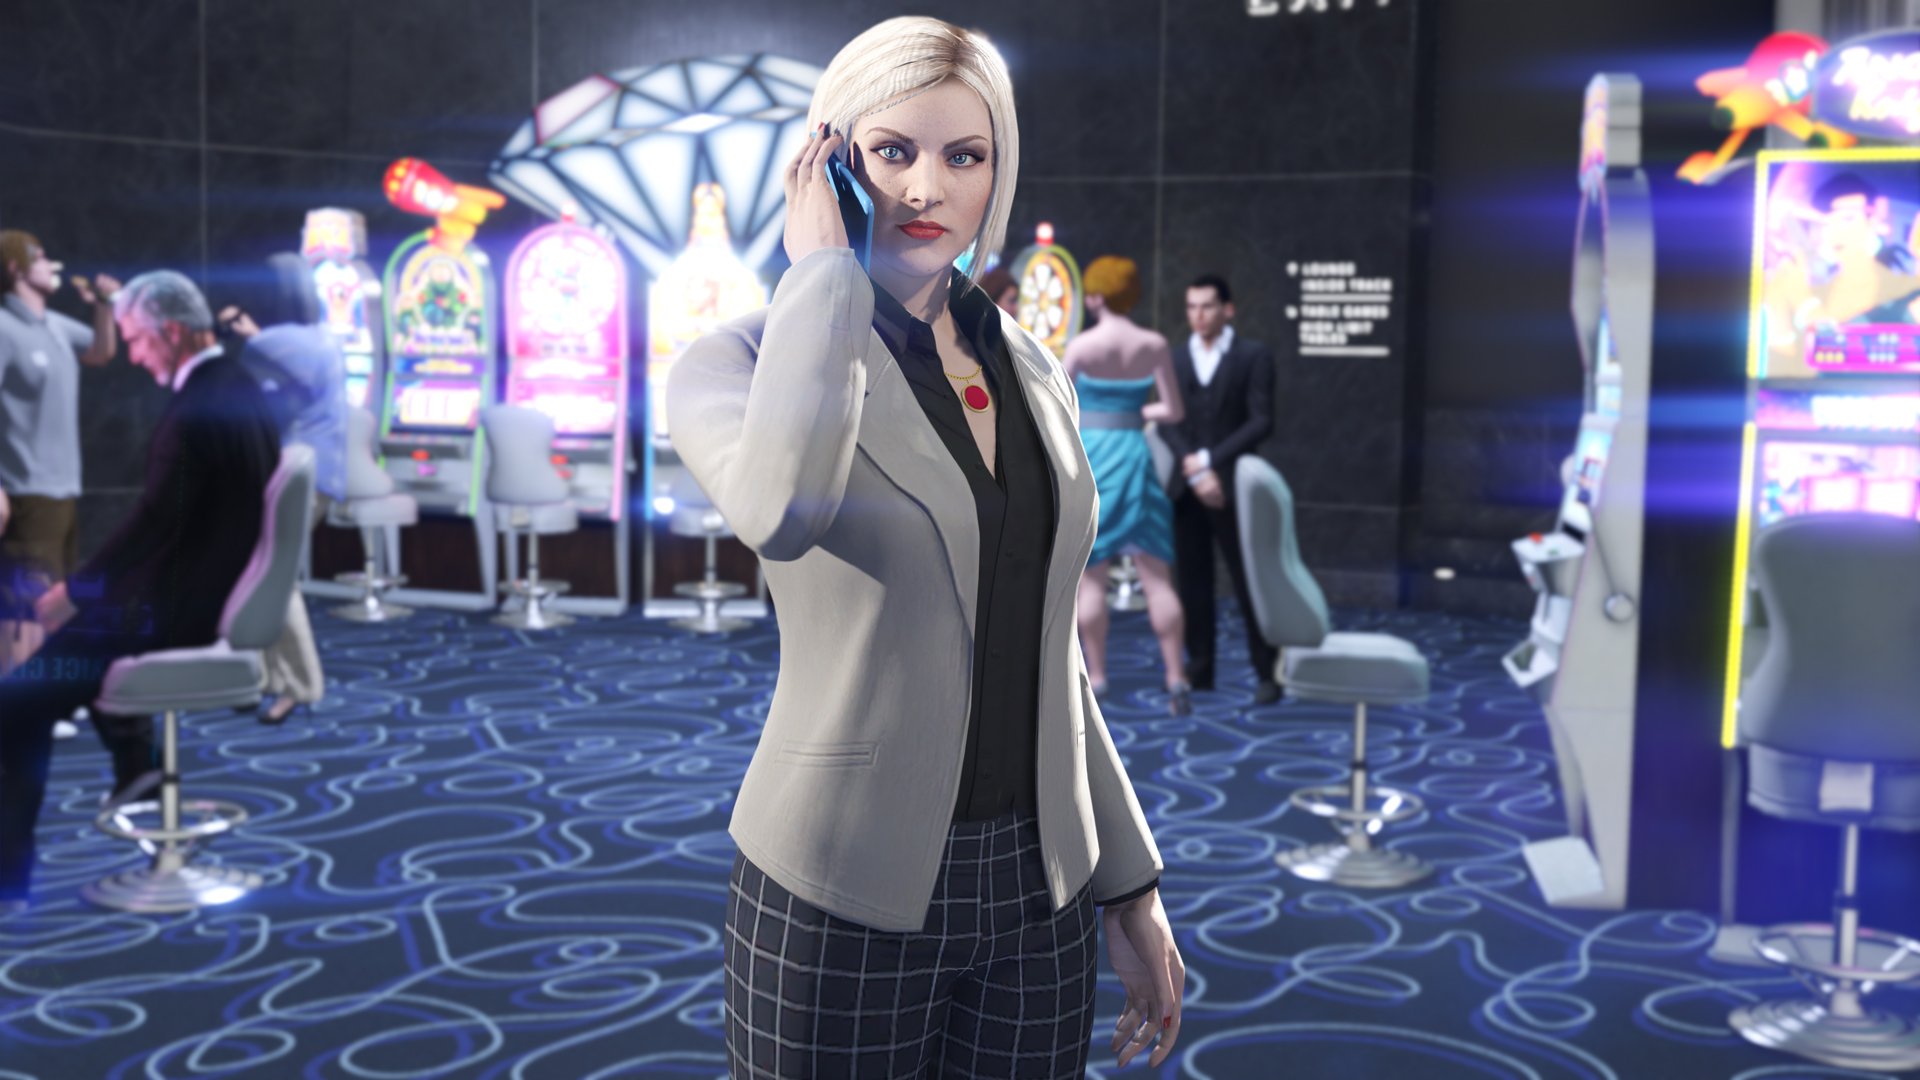 GTA 6: Alleged Leaks Showcase Female Protagonist, Return of Vice